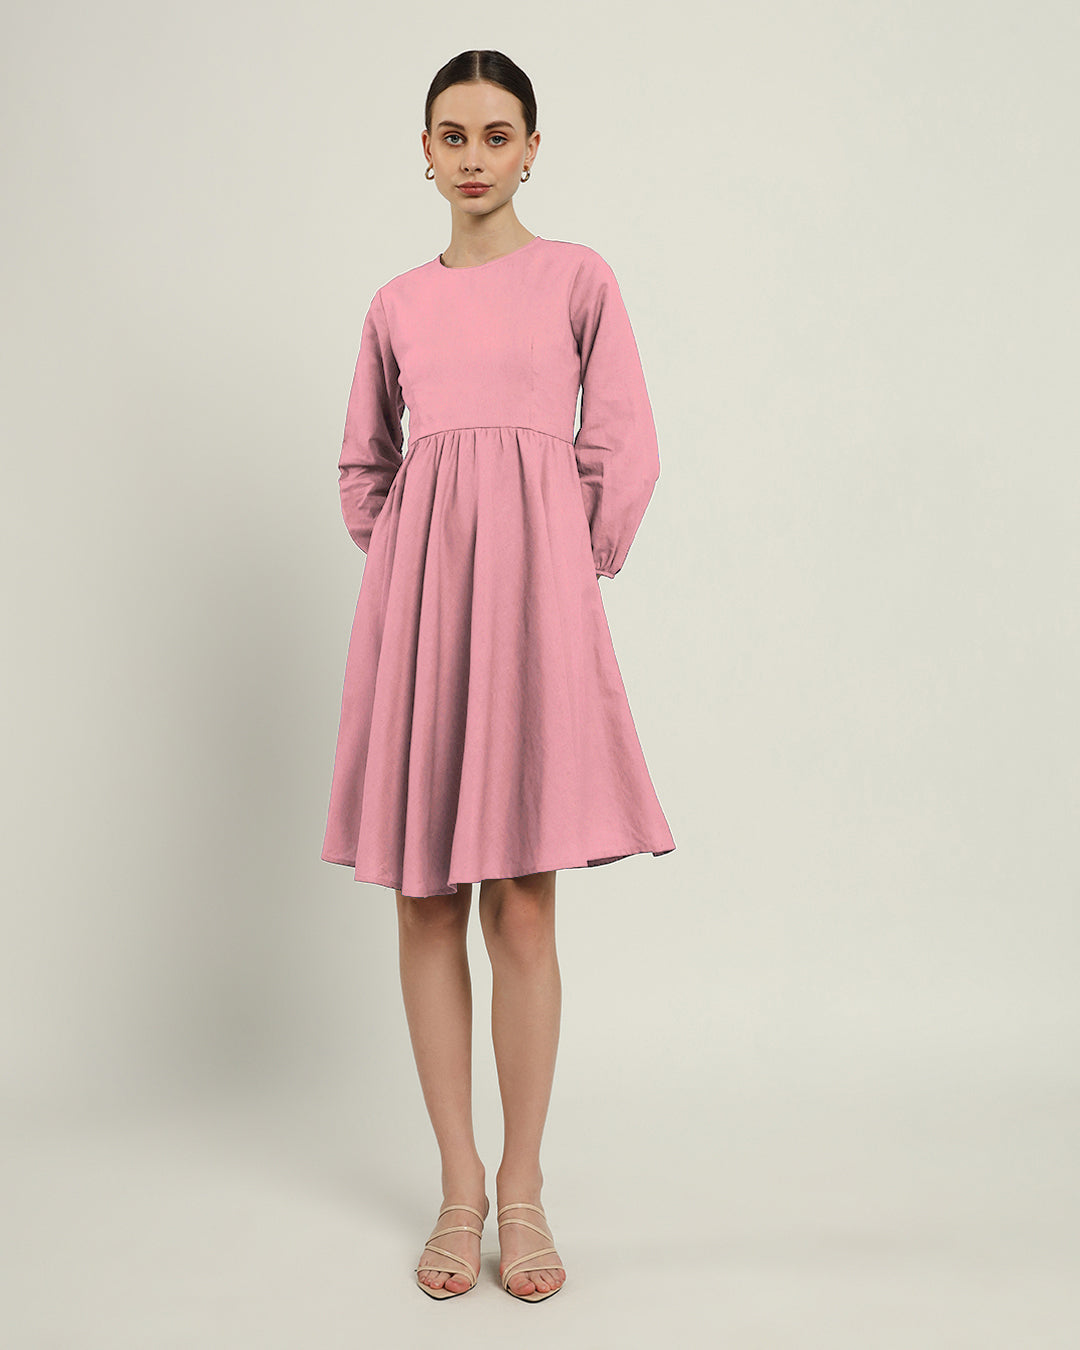 The Exeter Fondant Pink Cotton Dress